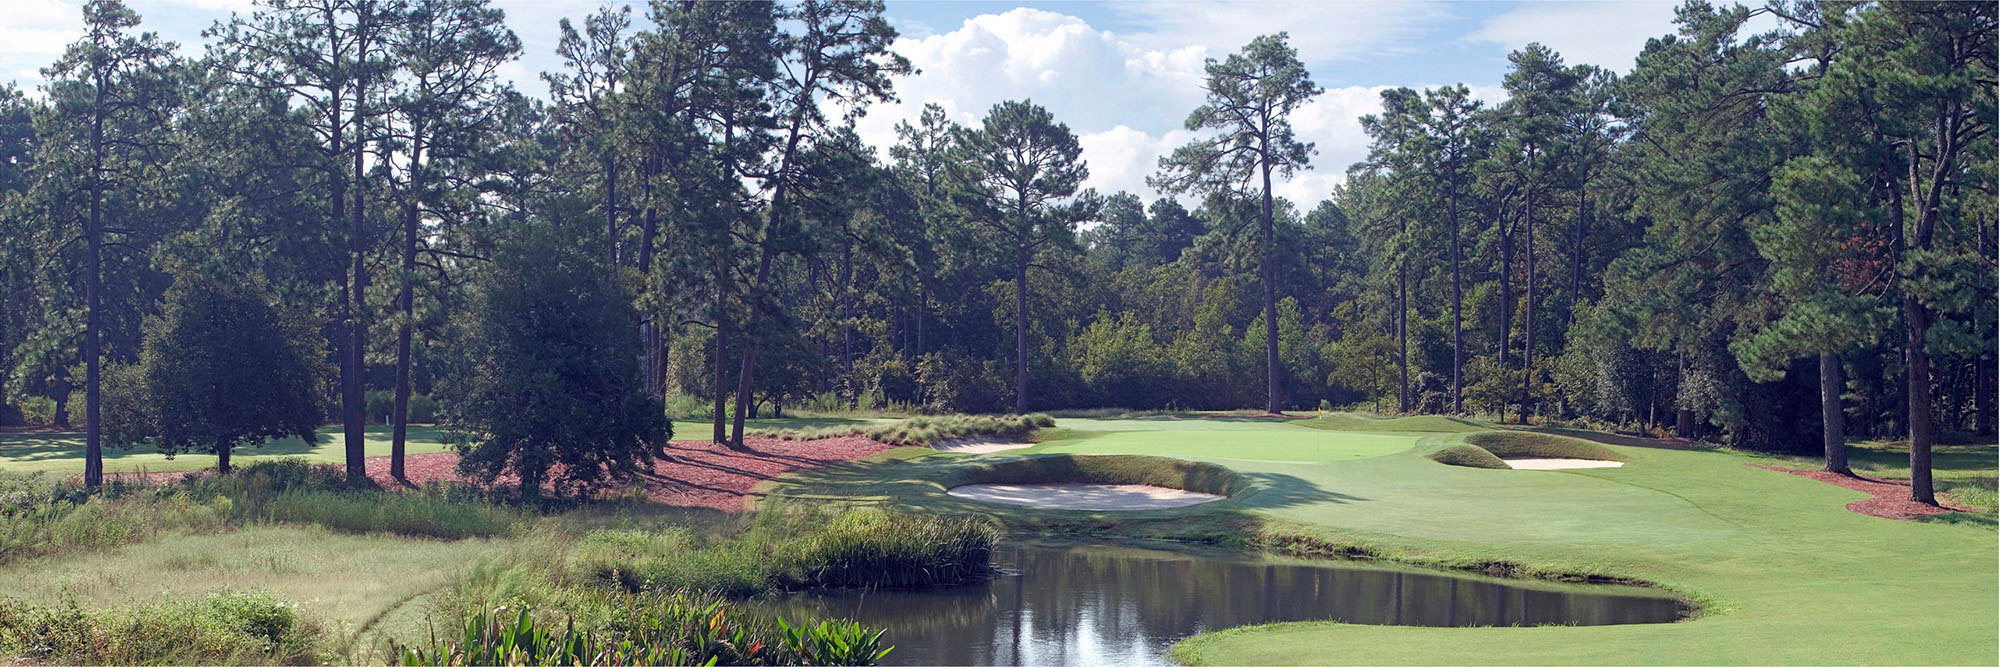 Golf Course Image - Pine Needles No. 3